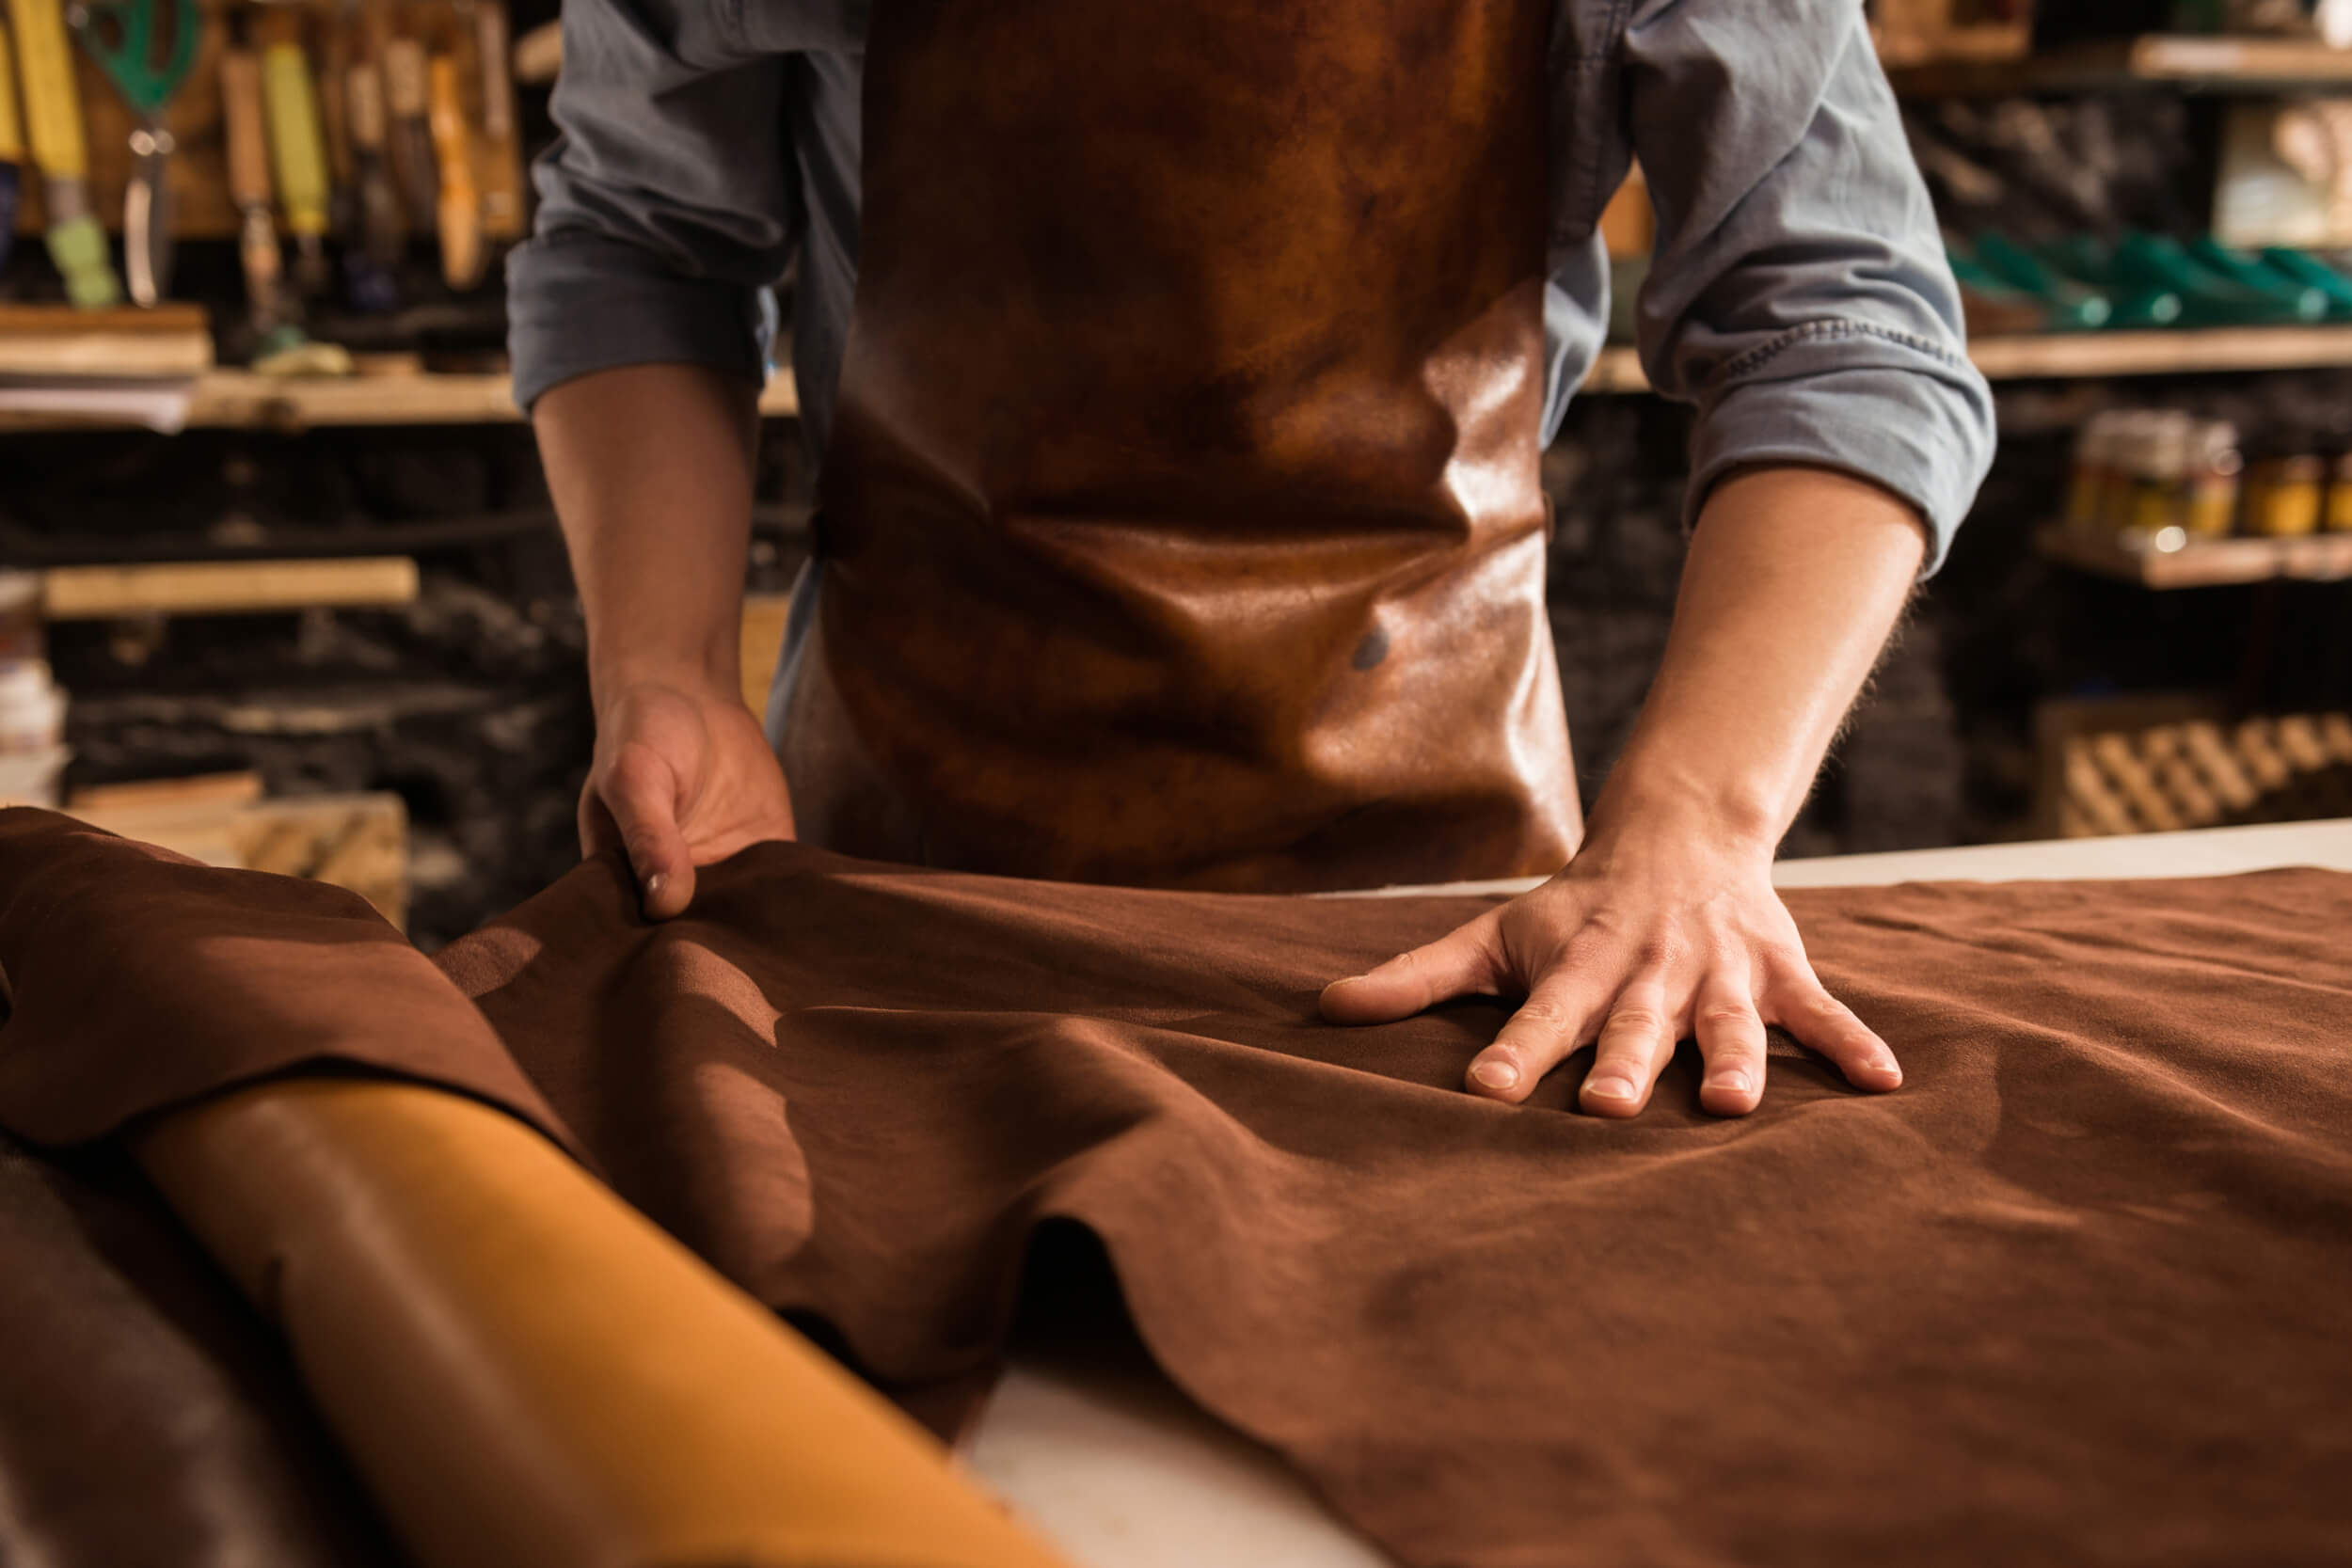 Leather workshop